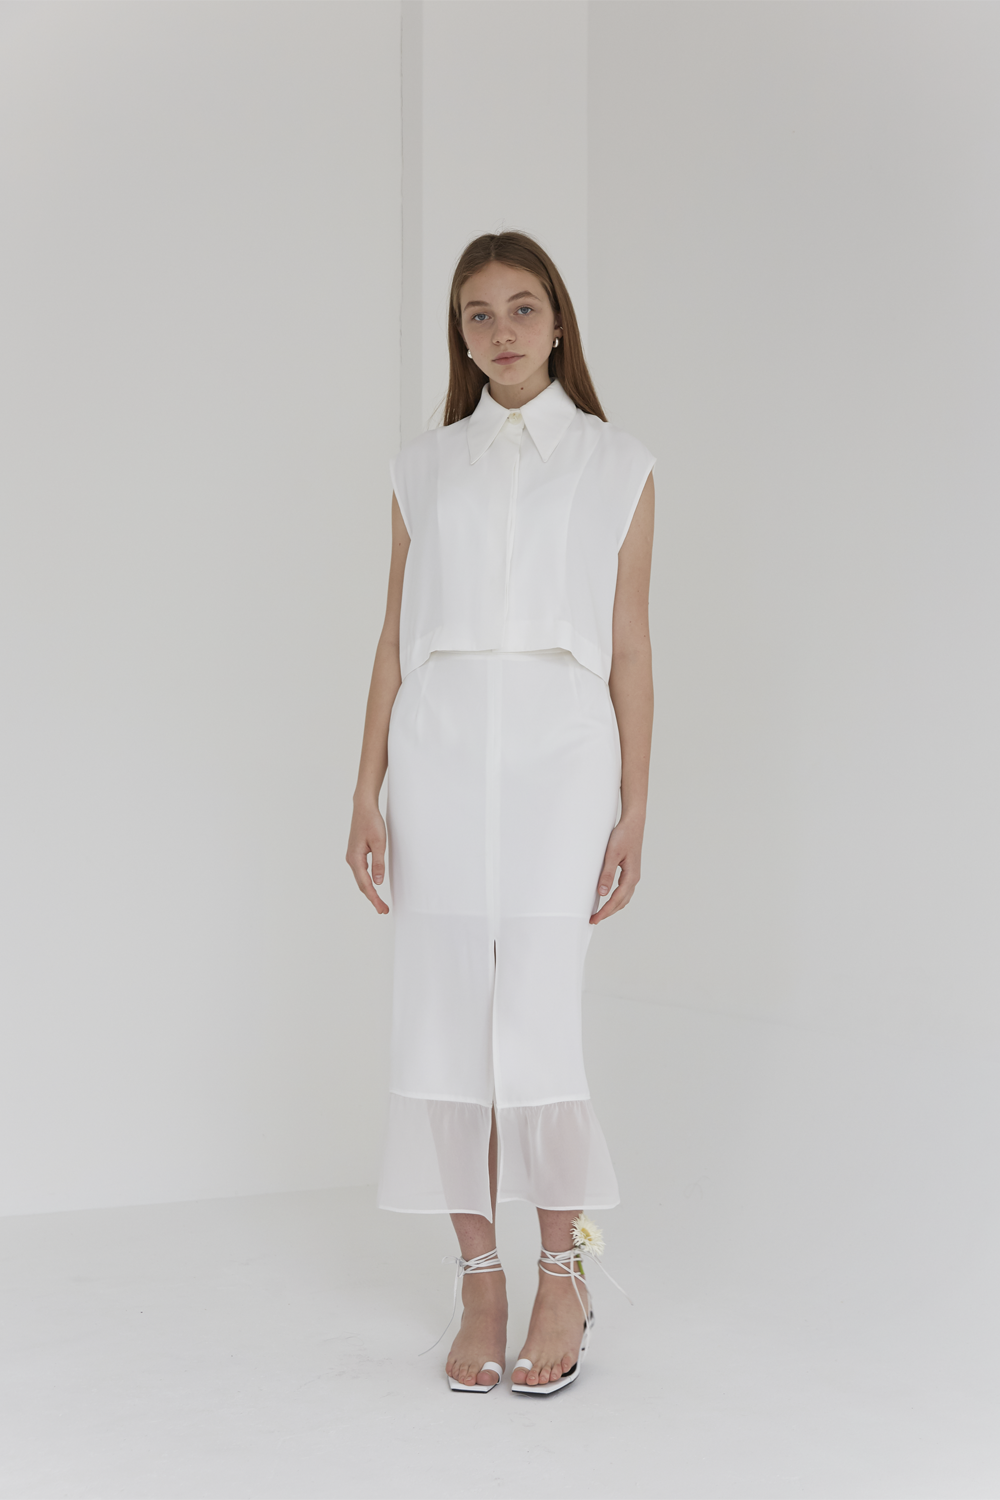 ANTHÈSE levent layered skirt, white